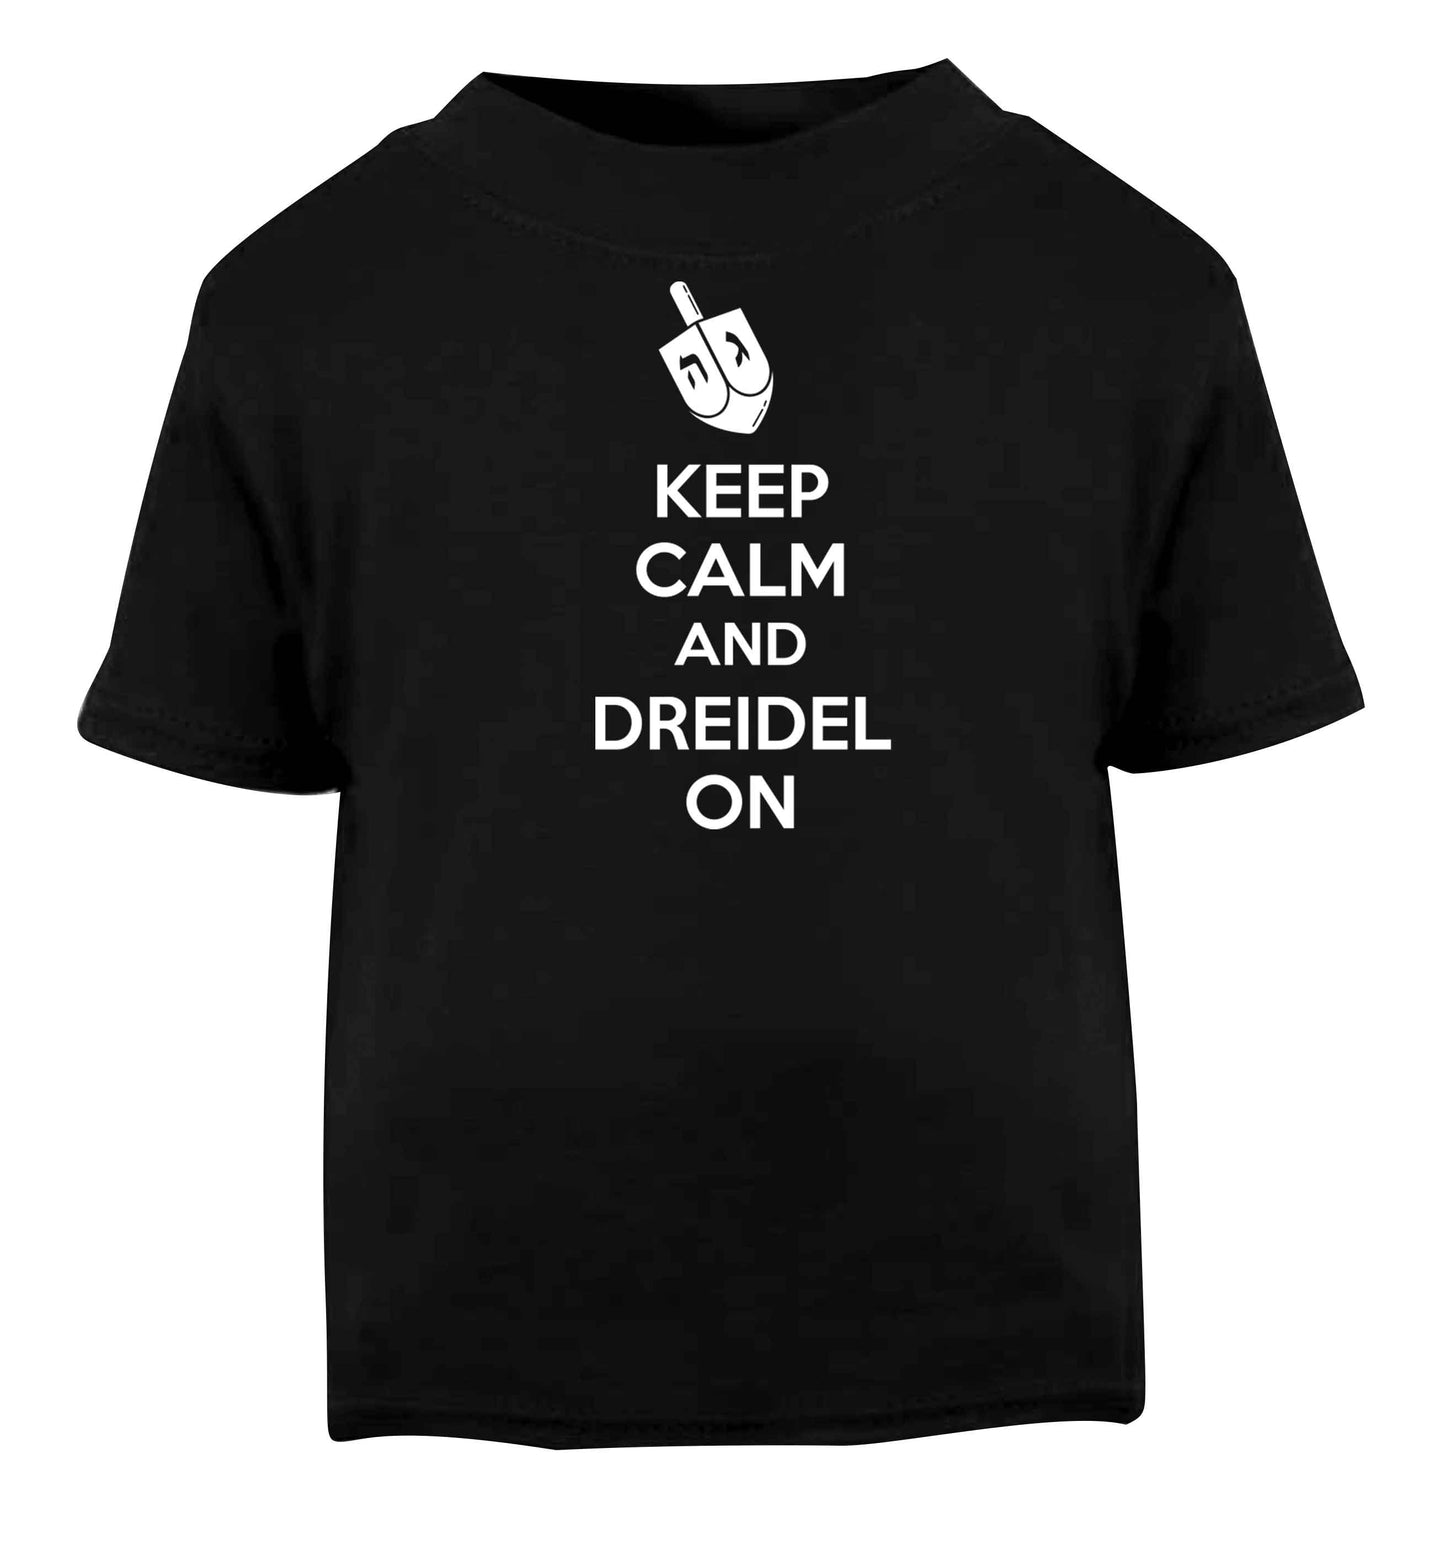 Keep calm and dreidel on Black baby toddler Tshirt 2 years